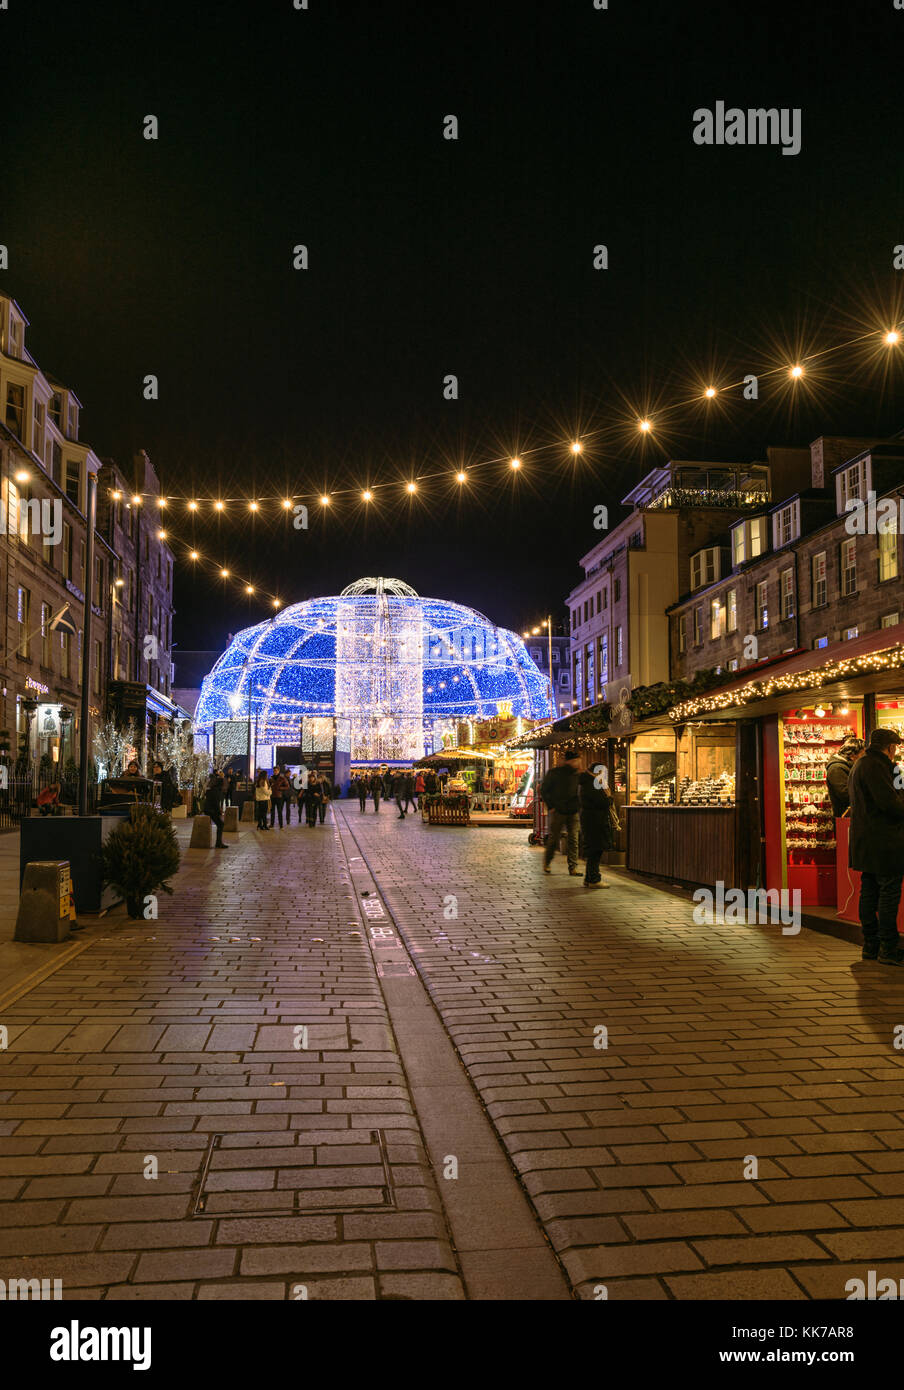 2017 Xmas lights installation and festivities at night in Edinburgh, Scotland, UK. Stock Photo